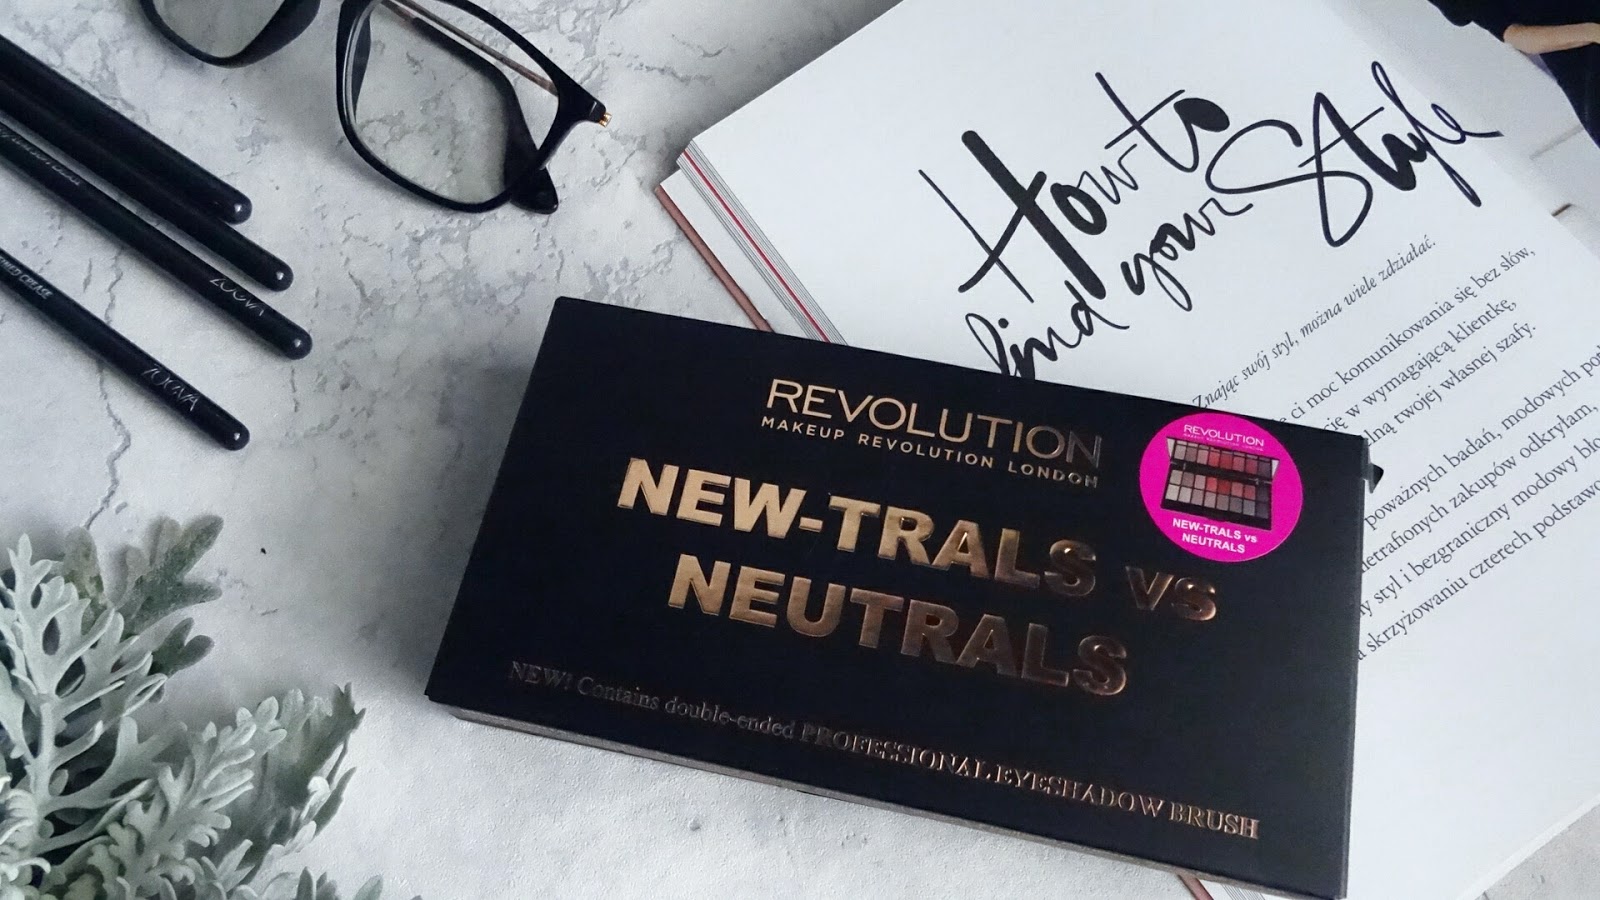 NEW - TRALS vs NEUTRALS marki MAKE-UP-REVOLUTION. wakacyjny makijaż